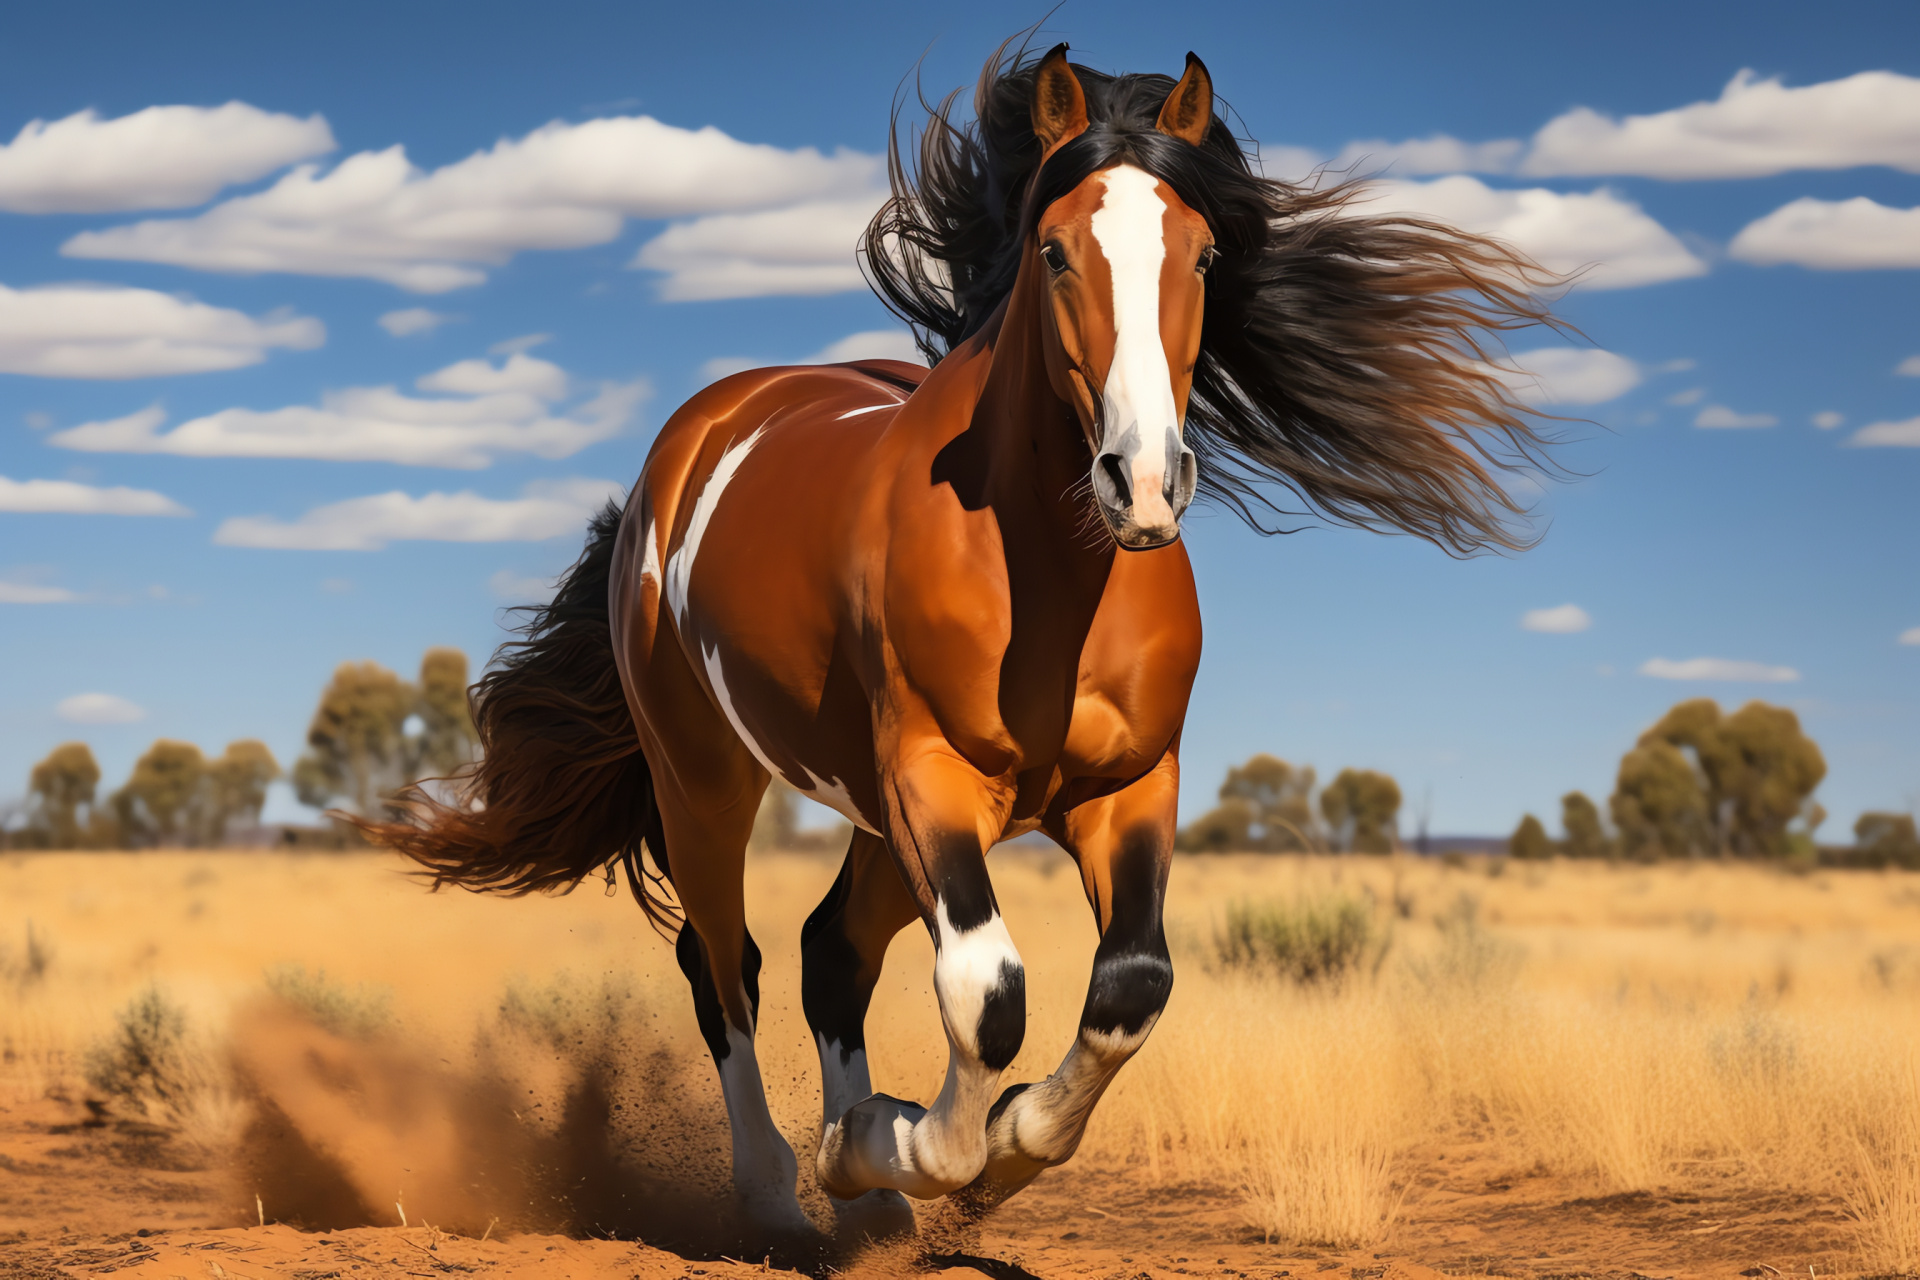 Australian Wild Brumby, Free-roaming horse, Striking pinto pattern, Outback equine, Natural landscape, HD Desktop Image